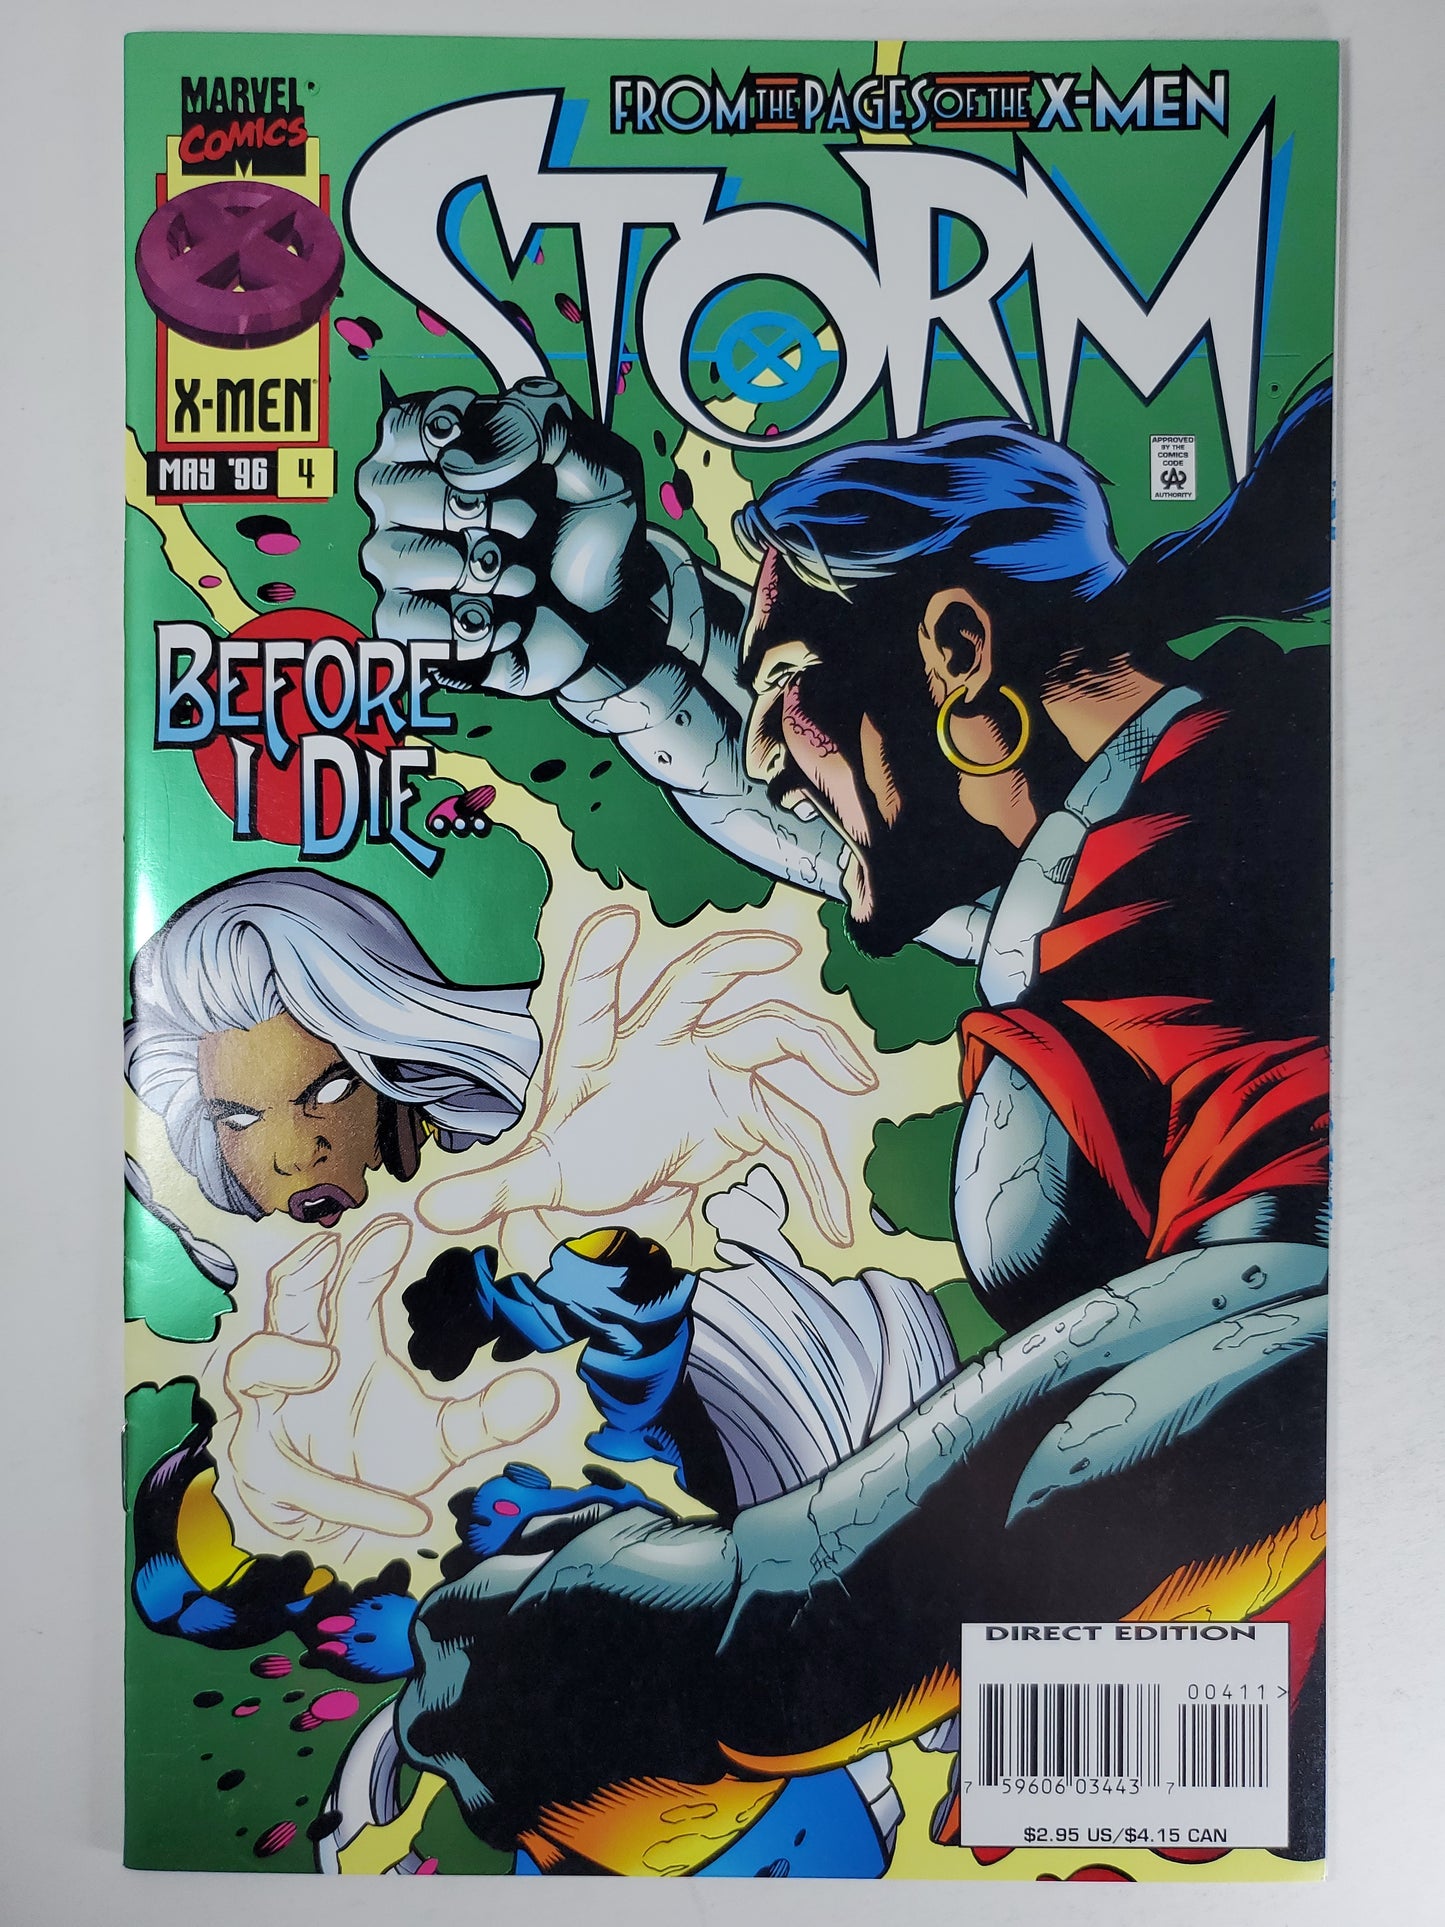 Marvel Storm Vol 1 #1-4 SET X-Men Limited Series FOIL (1996)